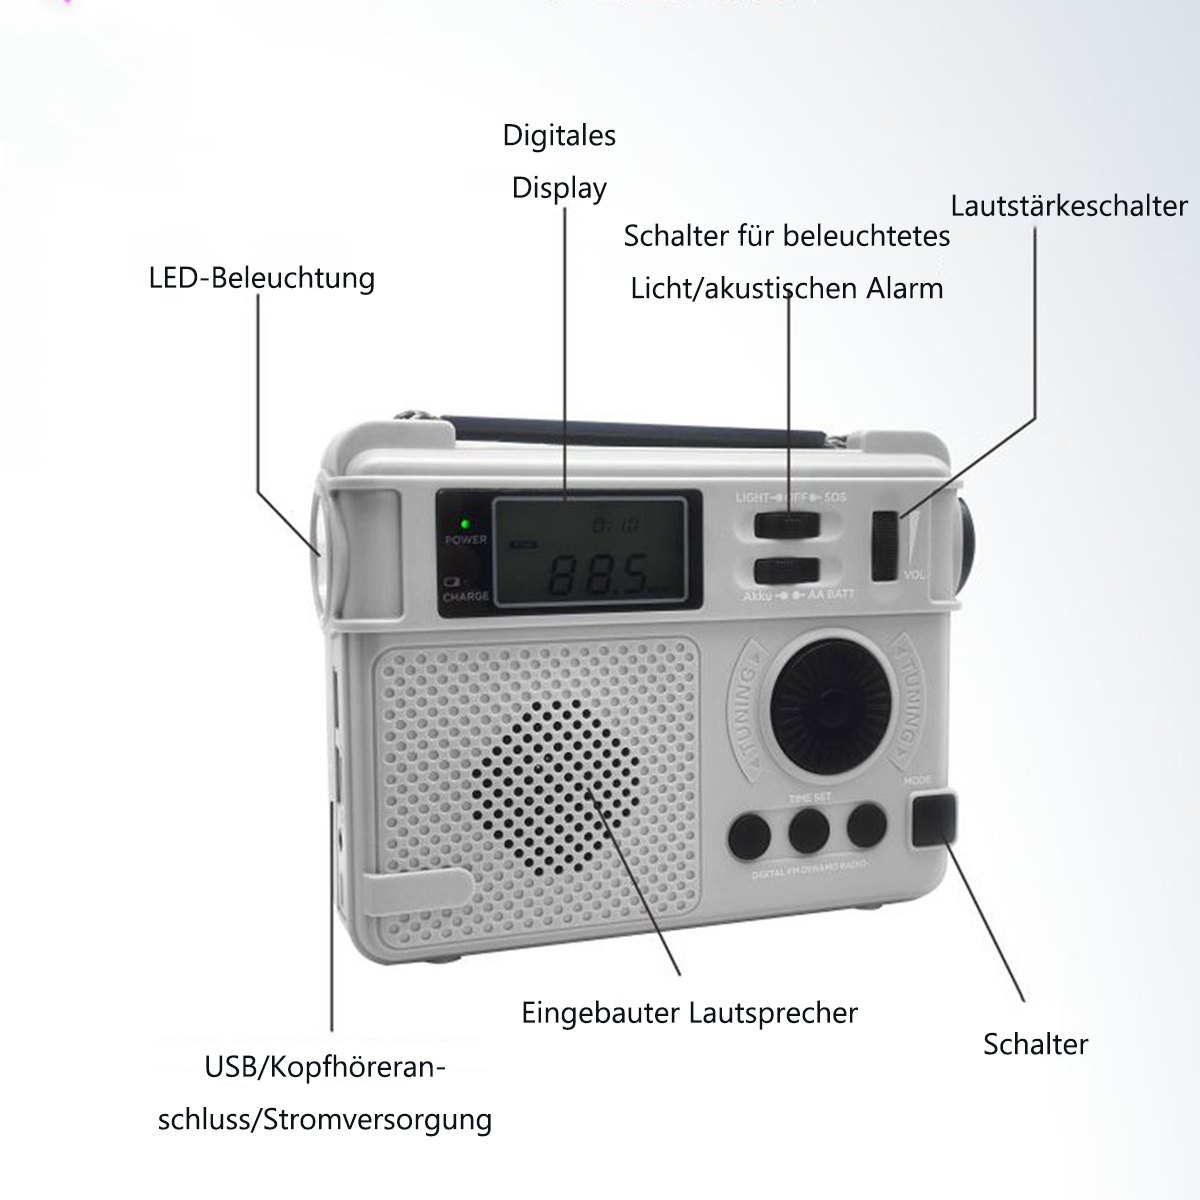 BRIGHTAKE Outdoor-Notradio: SOS-Sirene FM, MP3-Wiedergabe, Bluetooth, Grau Retro-Design, TF-Karte, Taschenlampe, Multi-Funktions-Radio